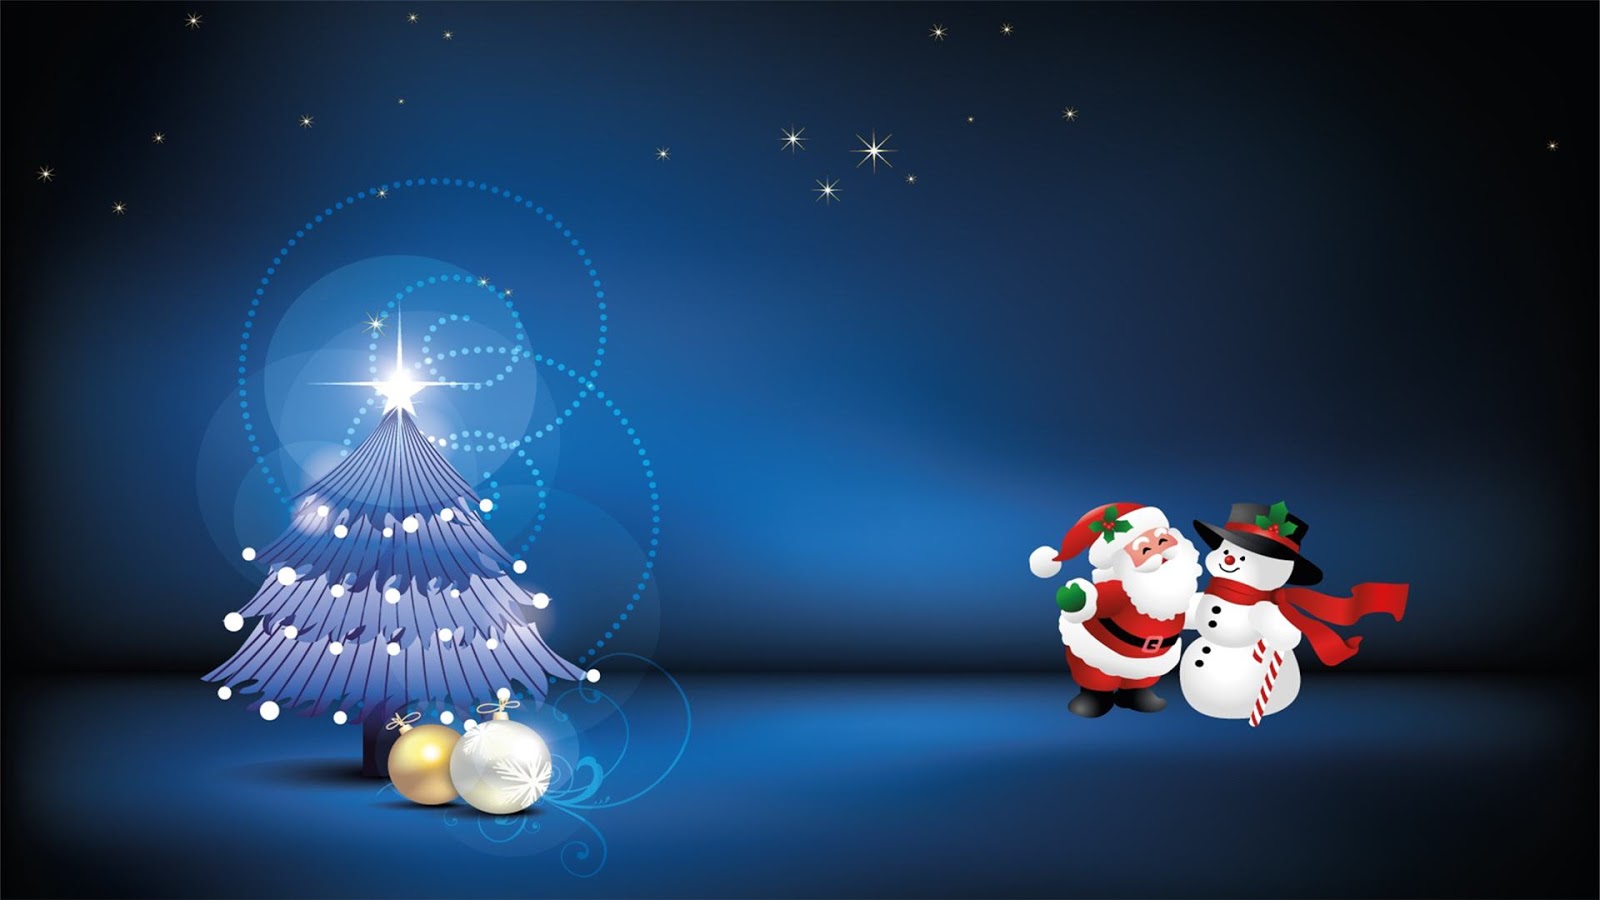 Download Hd Merry Christmas Wallpapers 2017 Dezignhd Afalchi Free images wallpape [afalchi.blogspot.com]